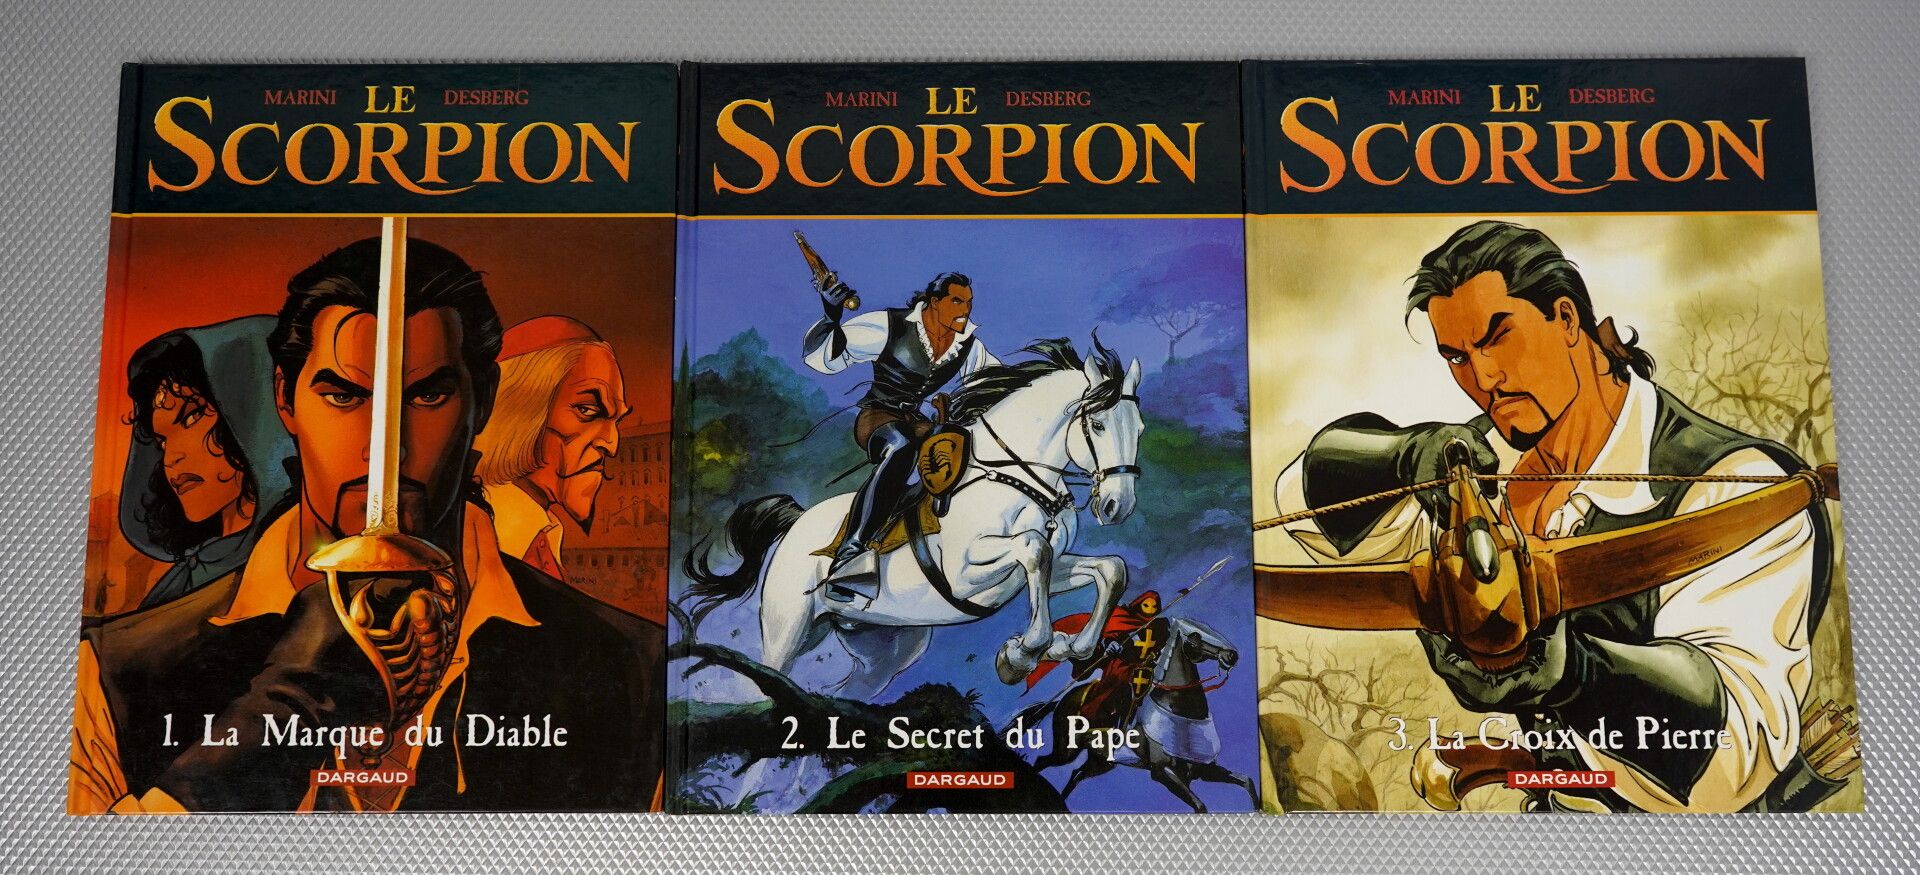 Null Le Scorpion（马里尼和德斯伯格）。13张专辑。



传奇的13卷，全部为EO版本。完美的状态。第一卷有8页的补充草图。